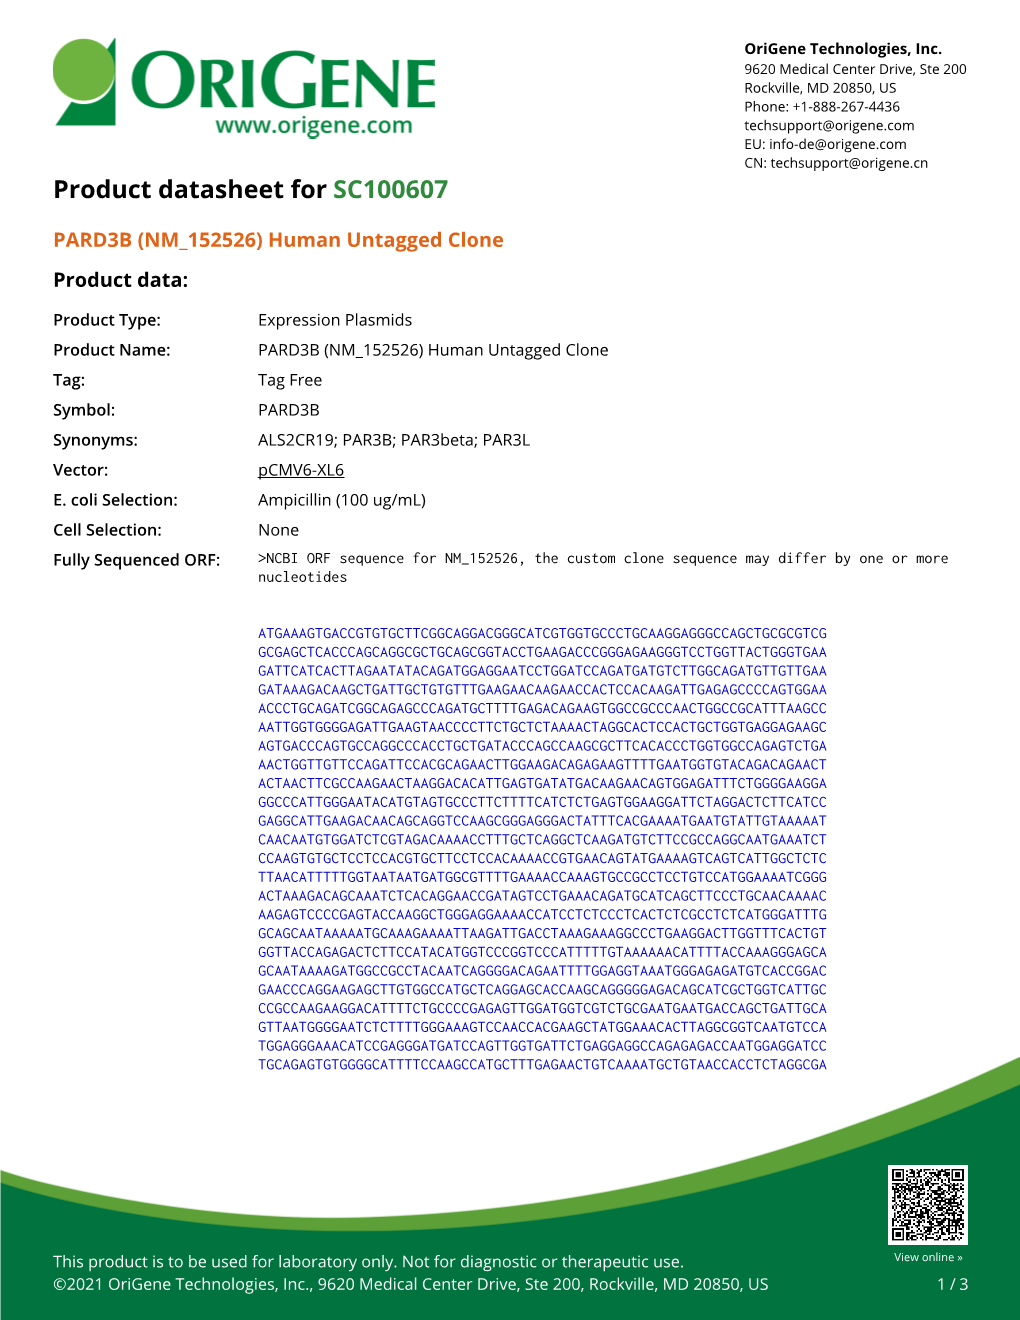 PARD3B (NM 152526) Human Untagged Clone Product Data